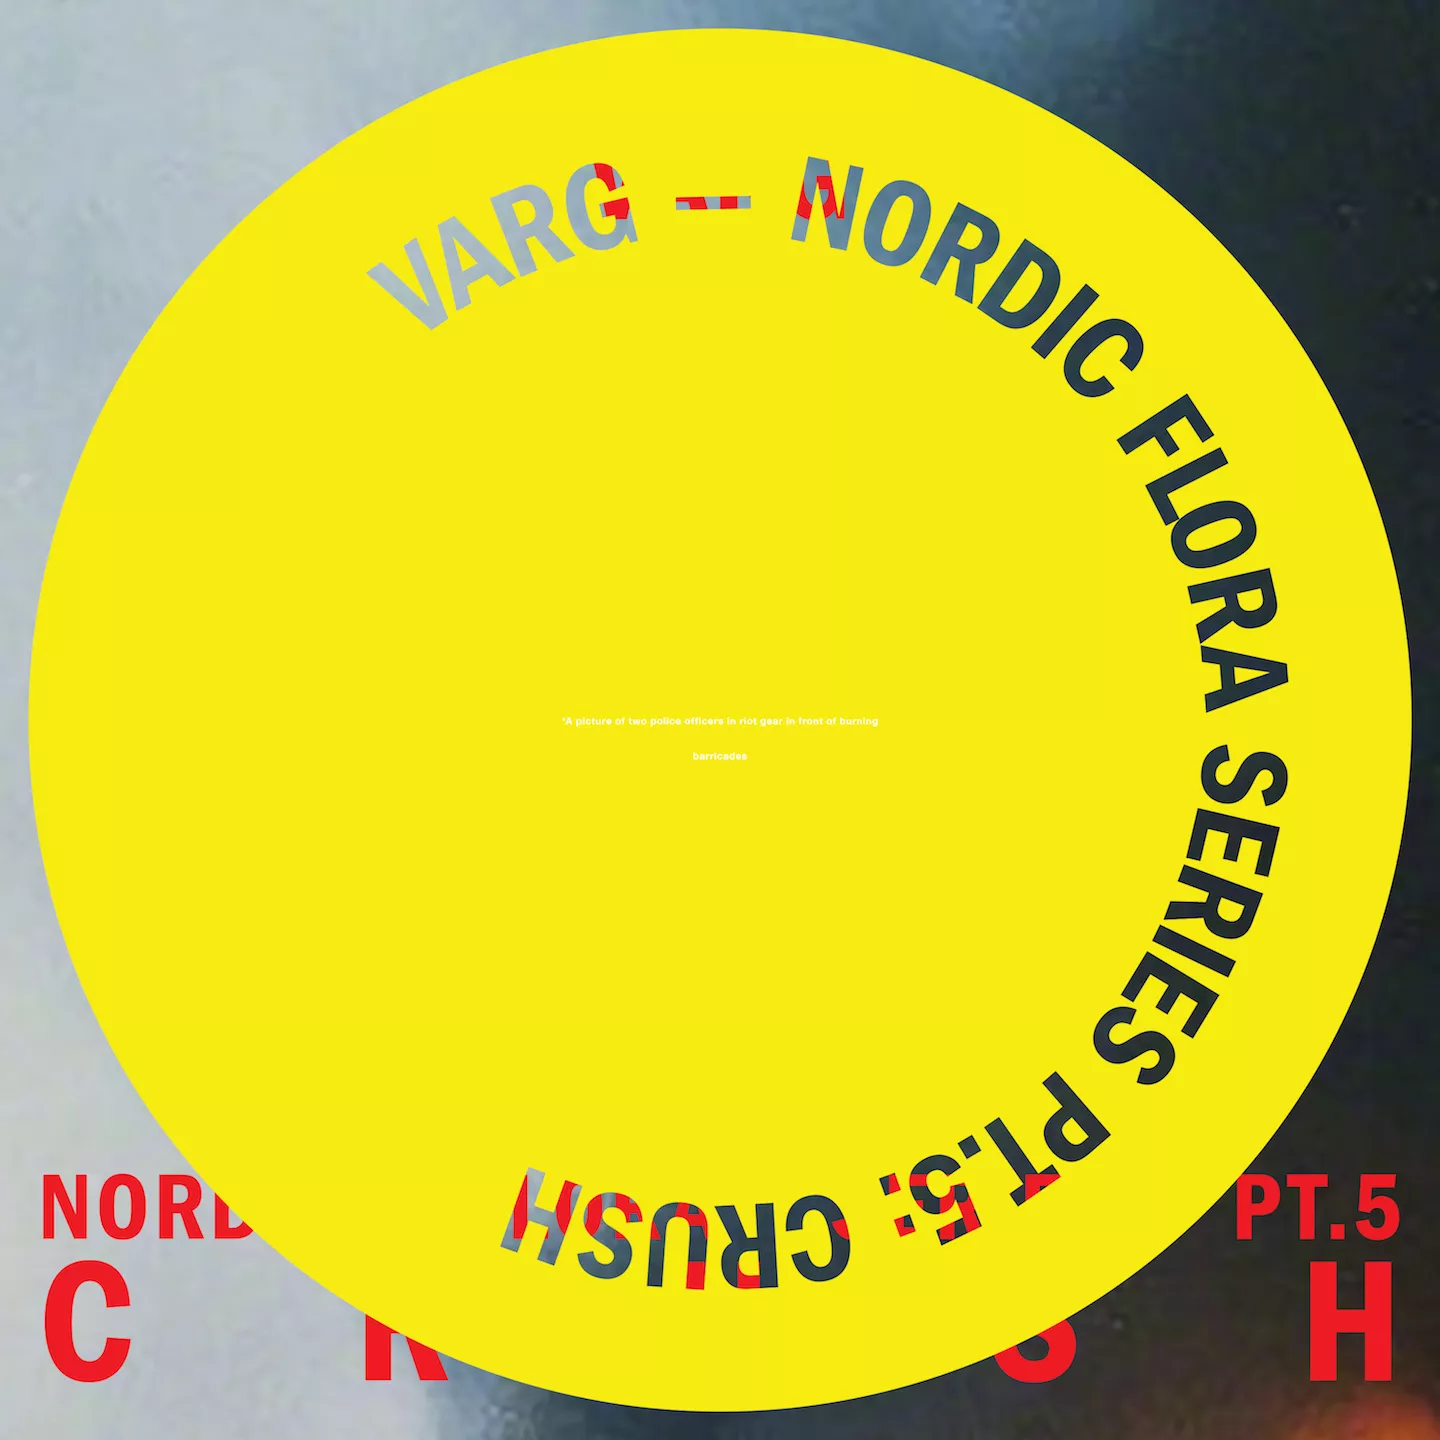 Nordic Flora Pt.5: Crush - Varg